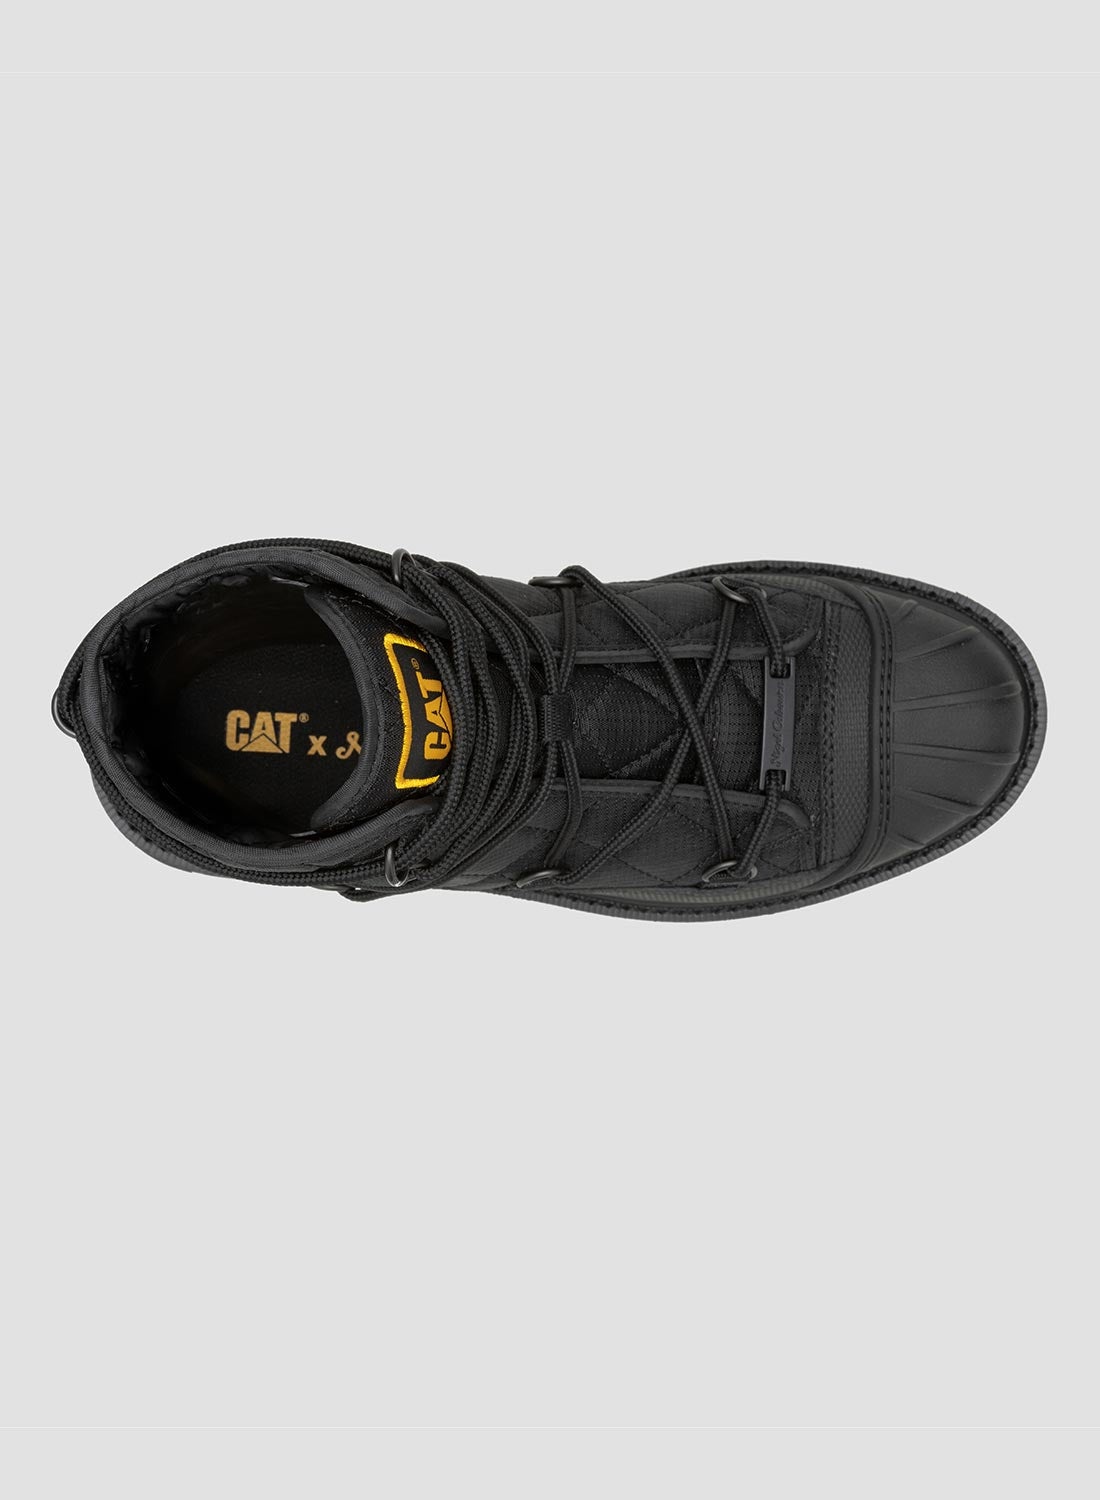 CAT Footwear x Nigel Cabourn Omaha Lace in Black - 8